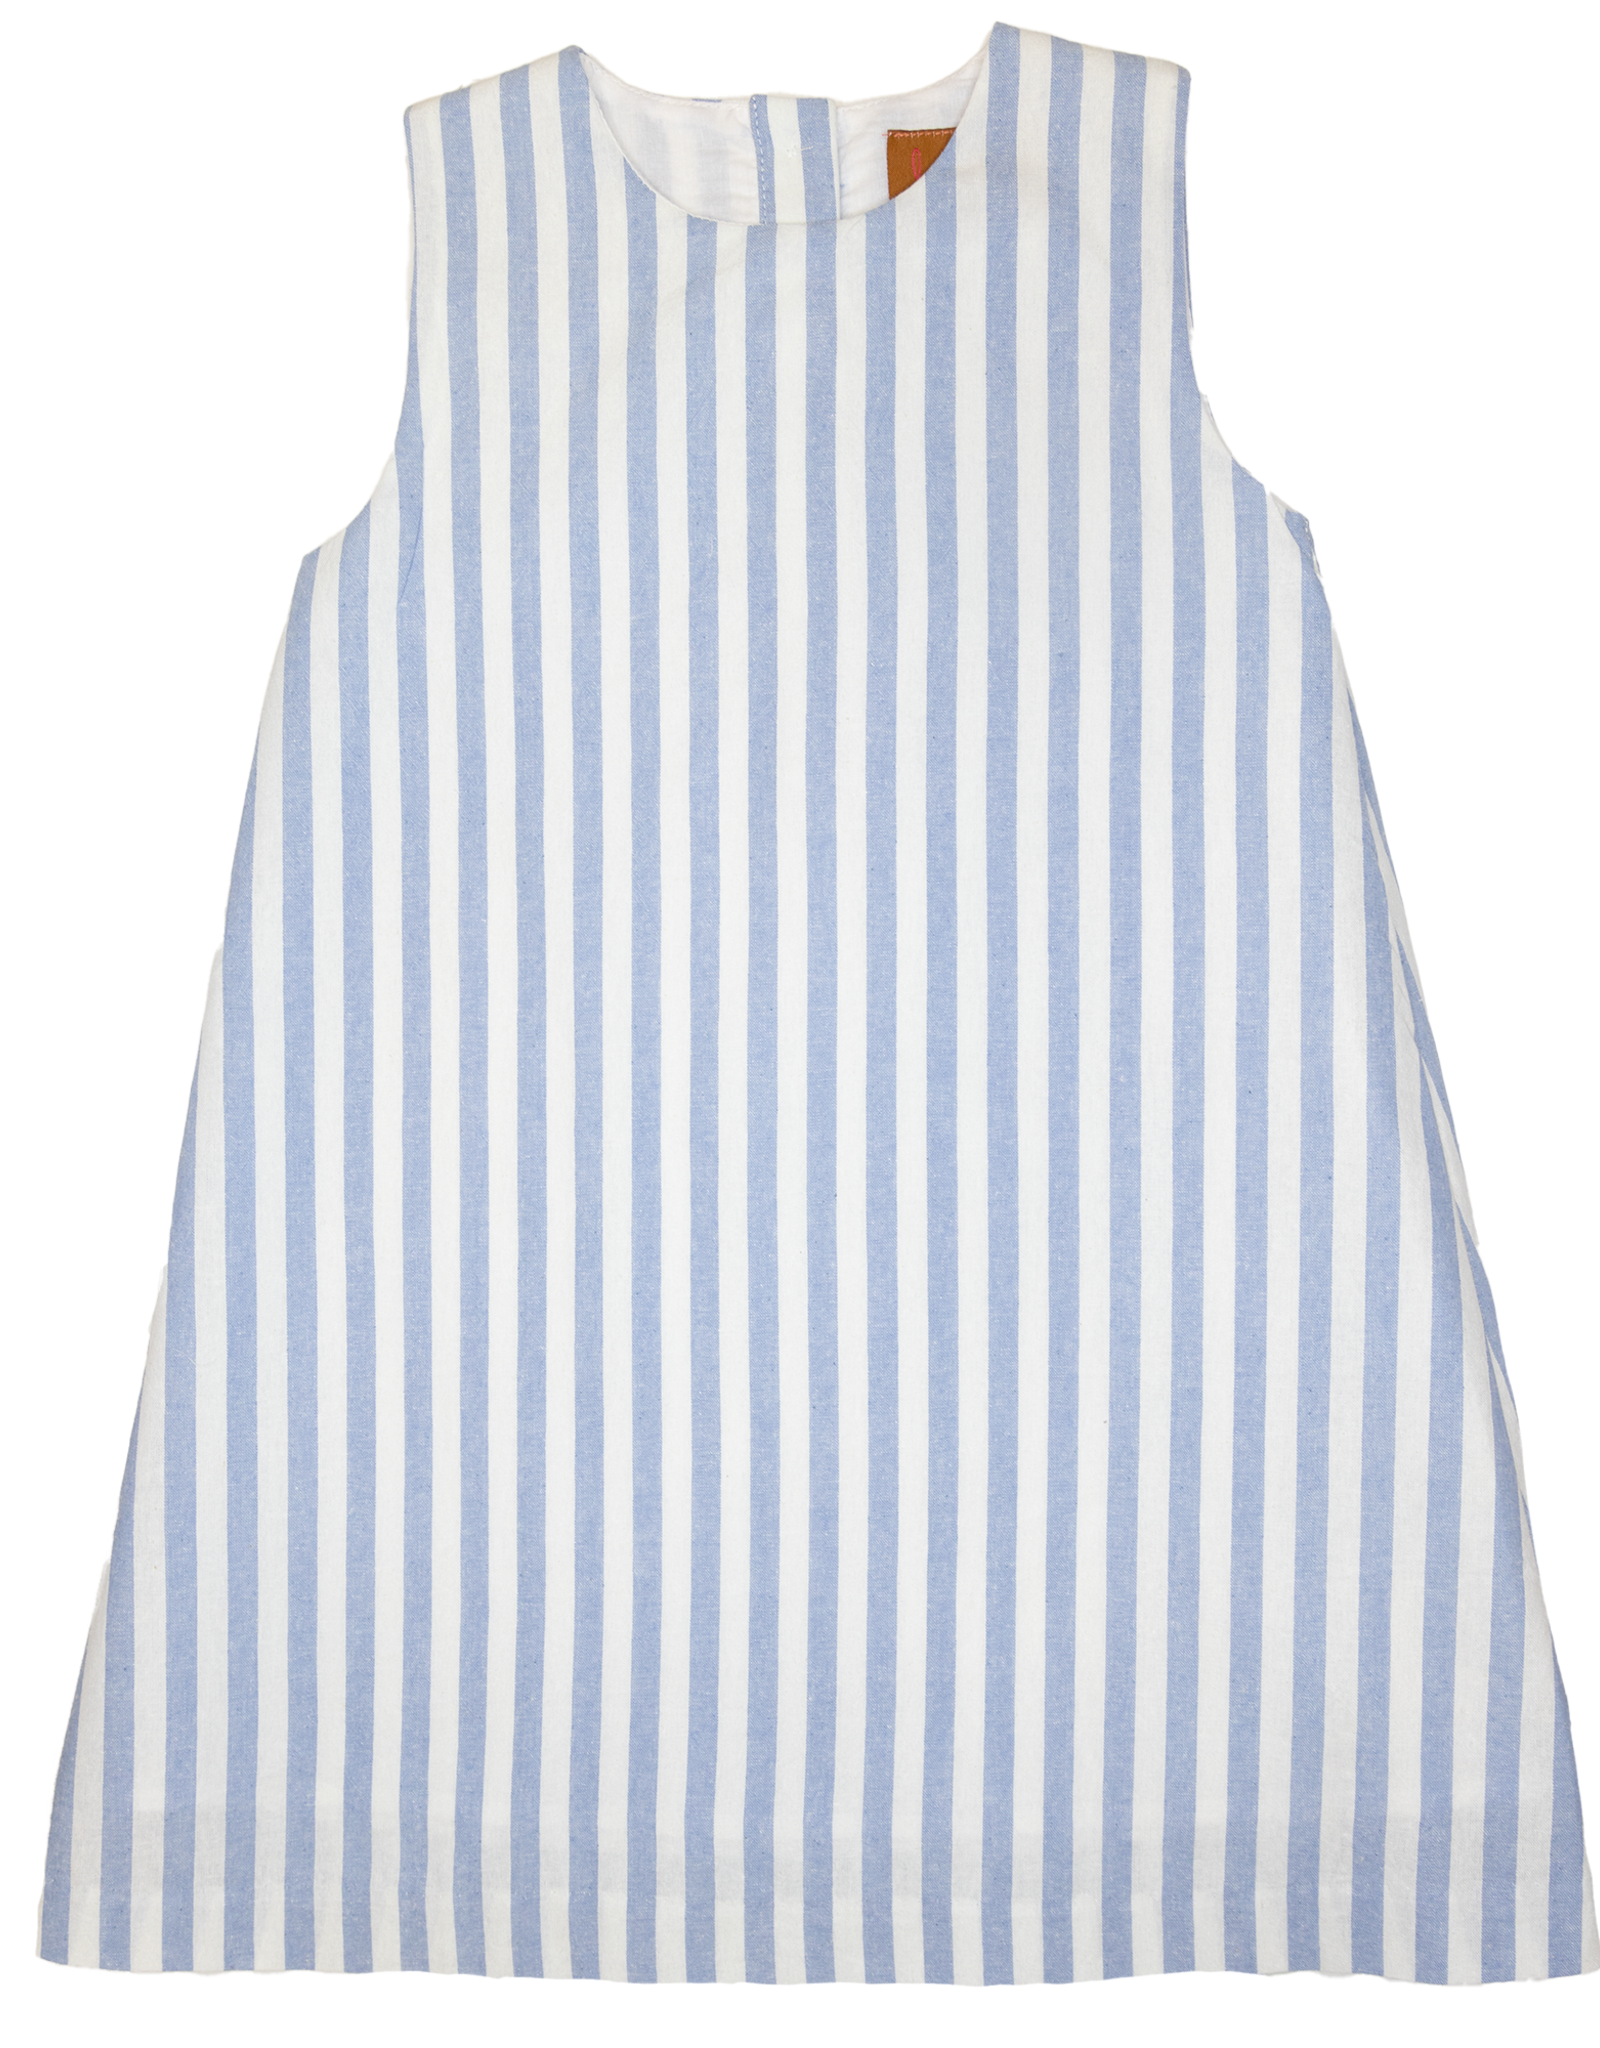 Millie Jay 670 Saige Aline Dress Blue Stripe